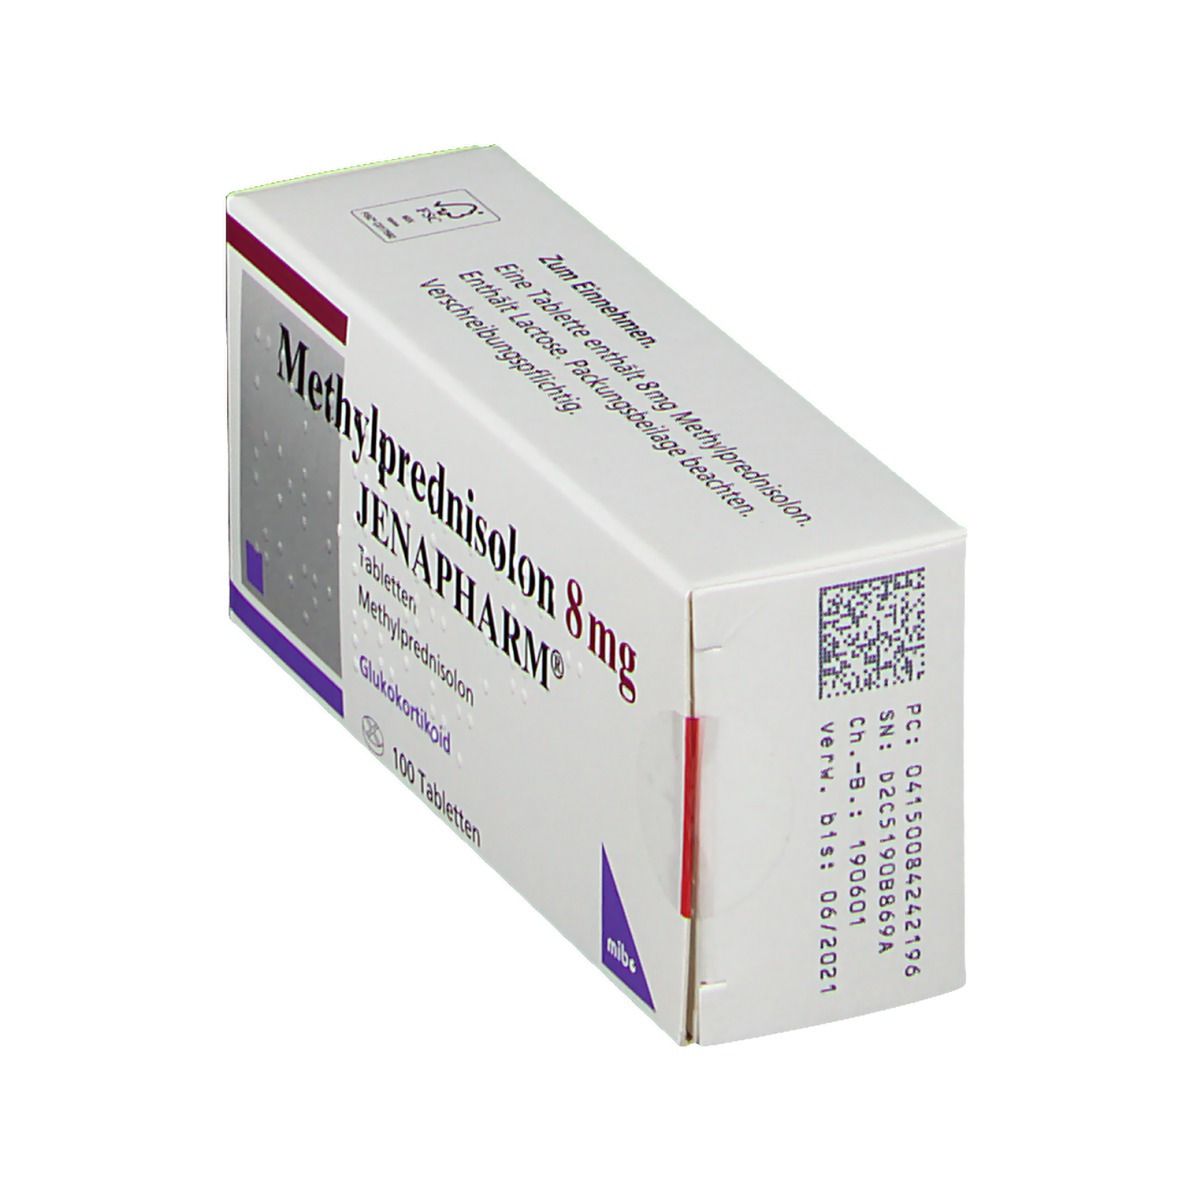 Methylprednisolon 8 mg JENAPHARM®